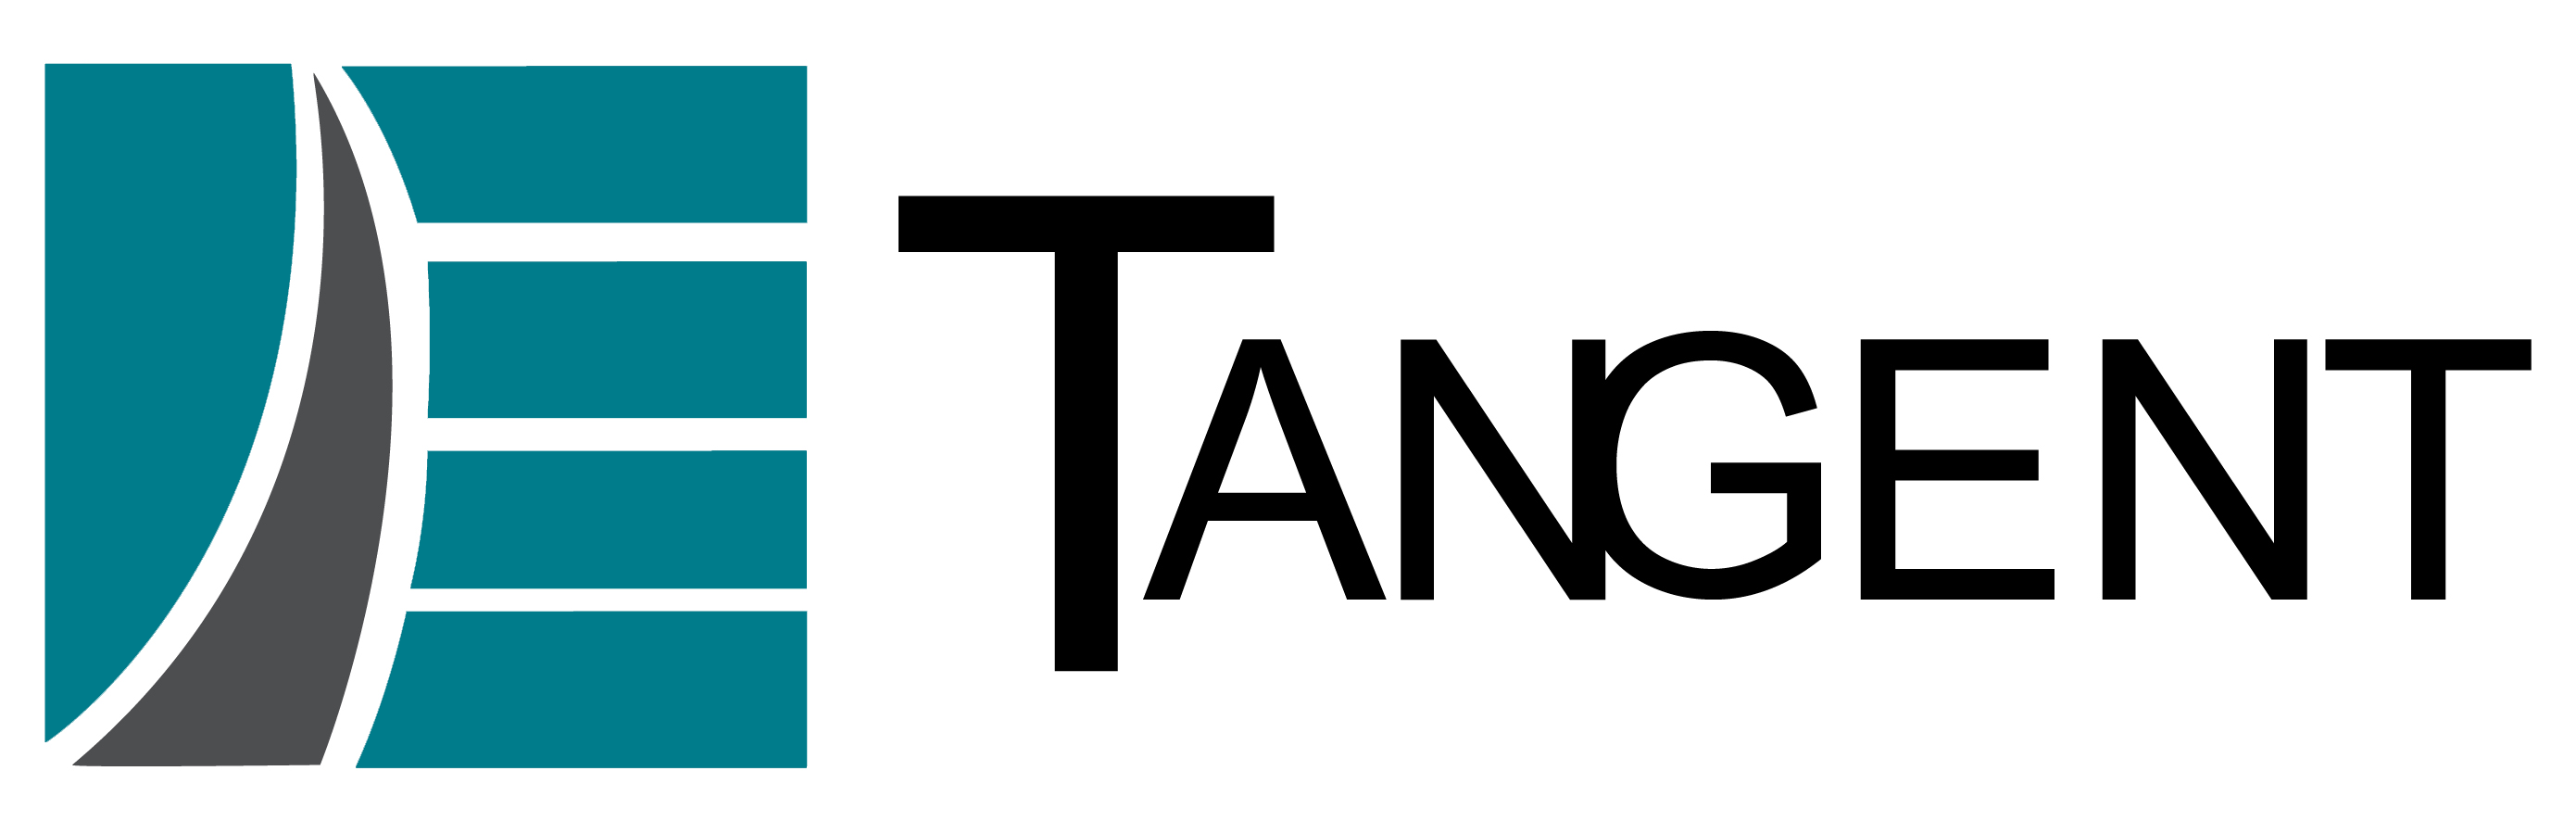 Tangent Solutions Inc